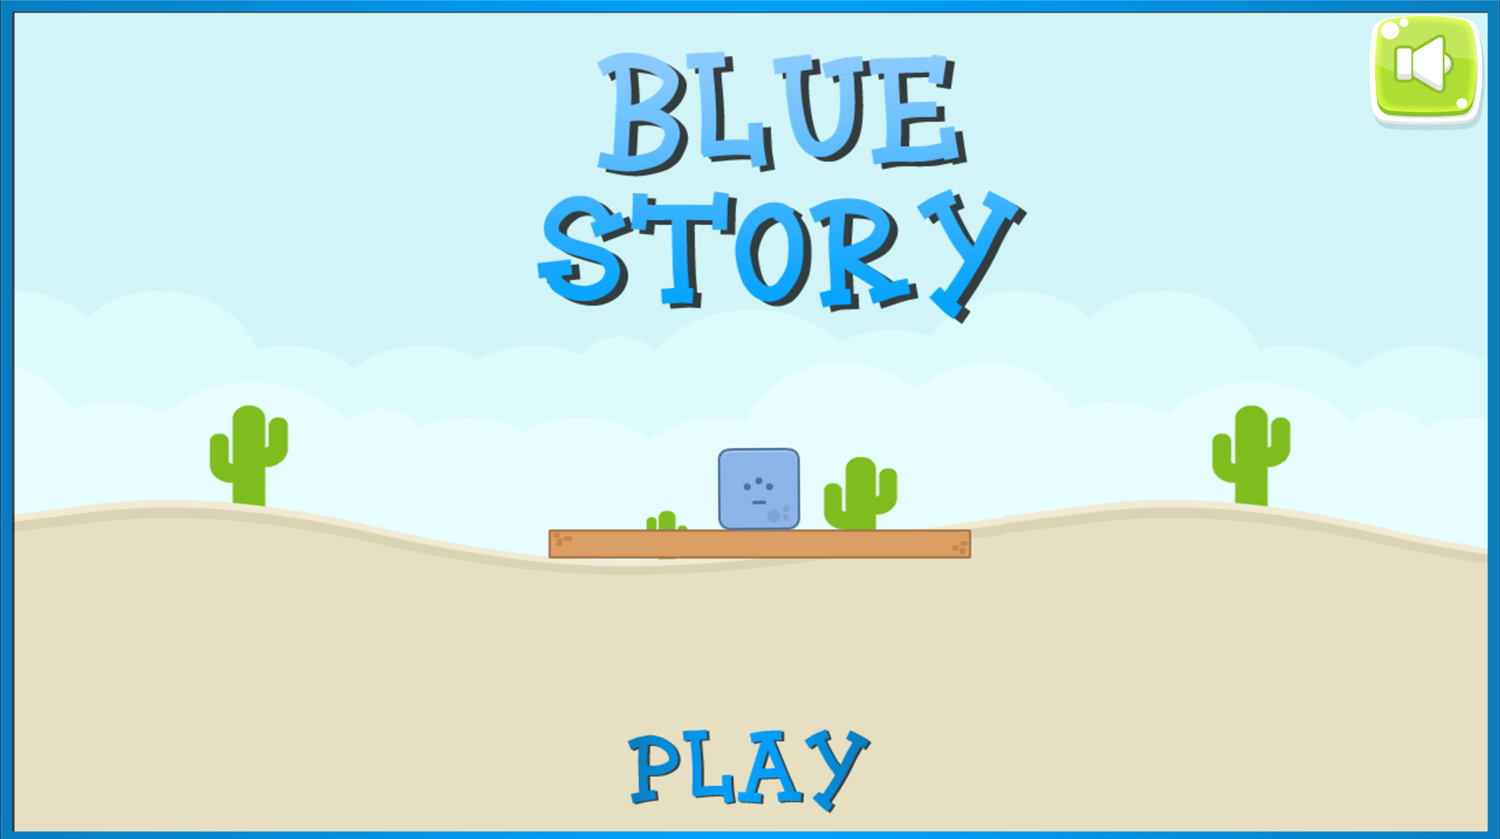 Blue Story Game Welcome Screenshot.